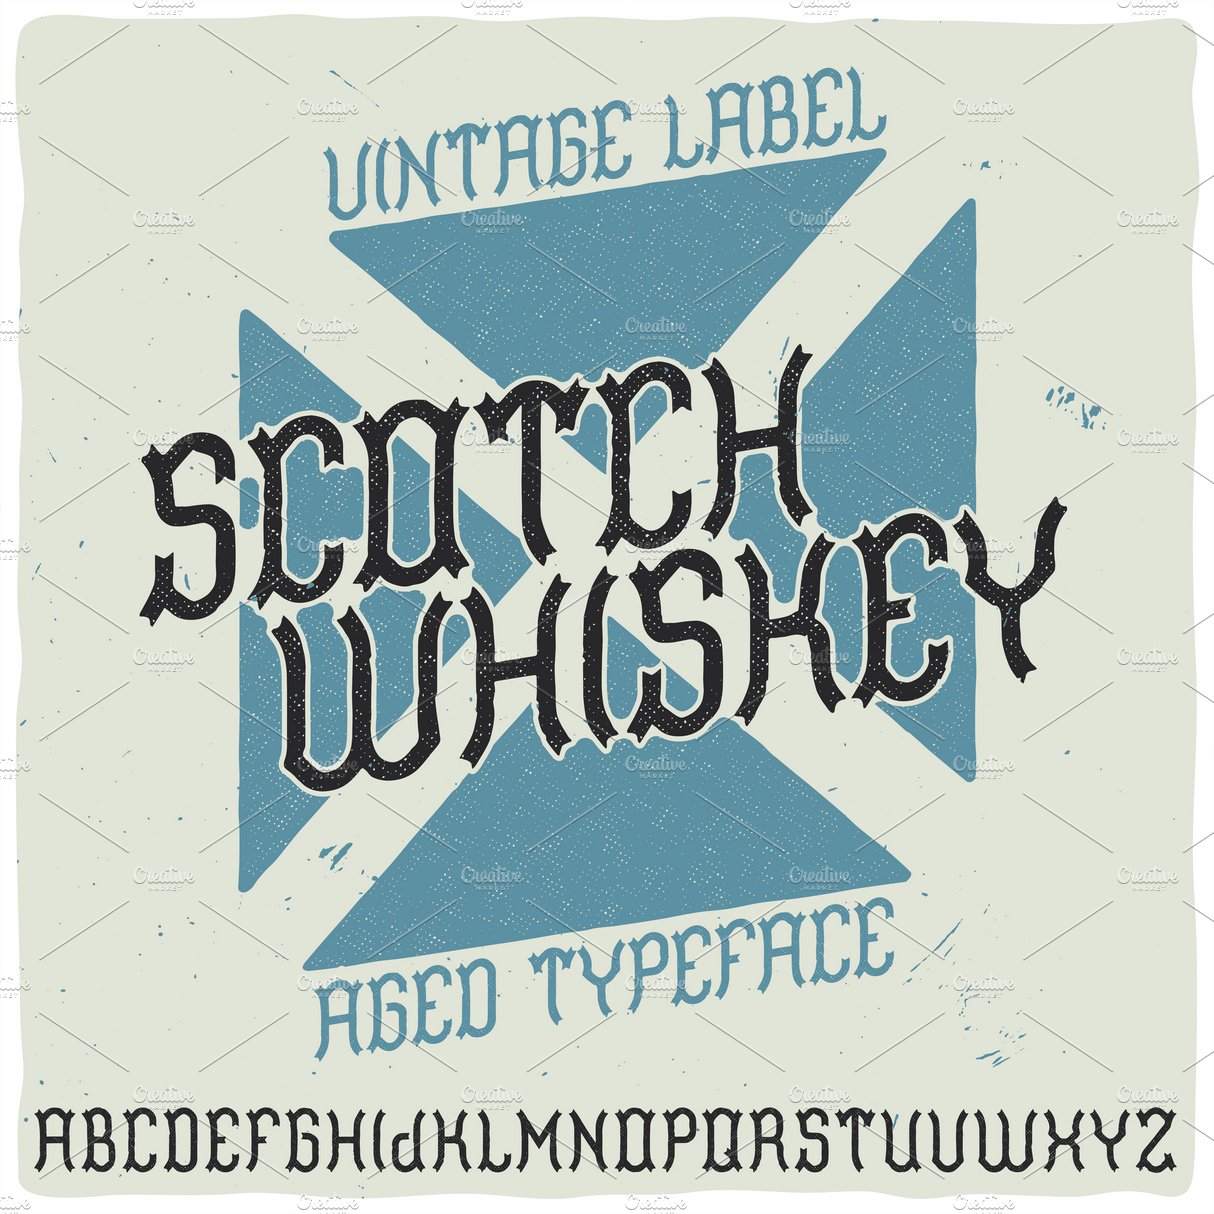 1710.a002.scotchwhiskey typeface.s3 465